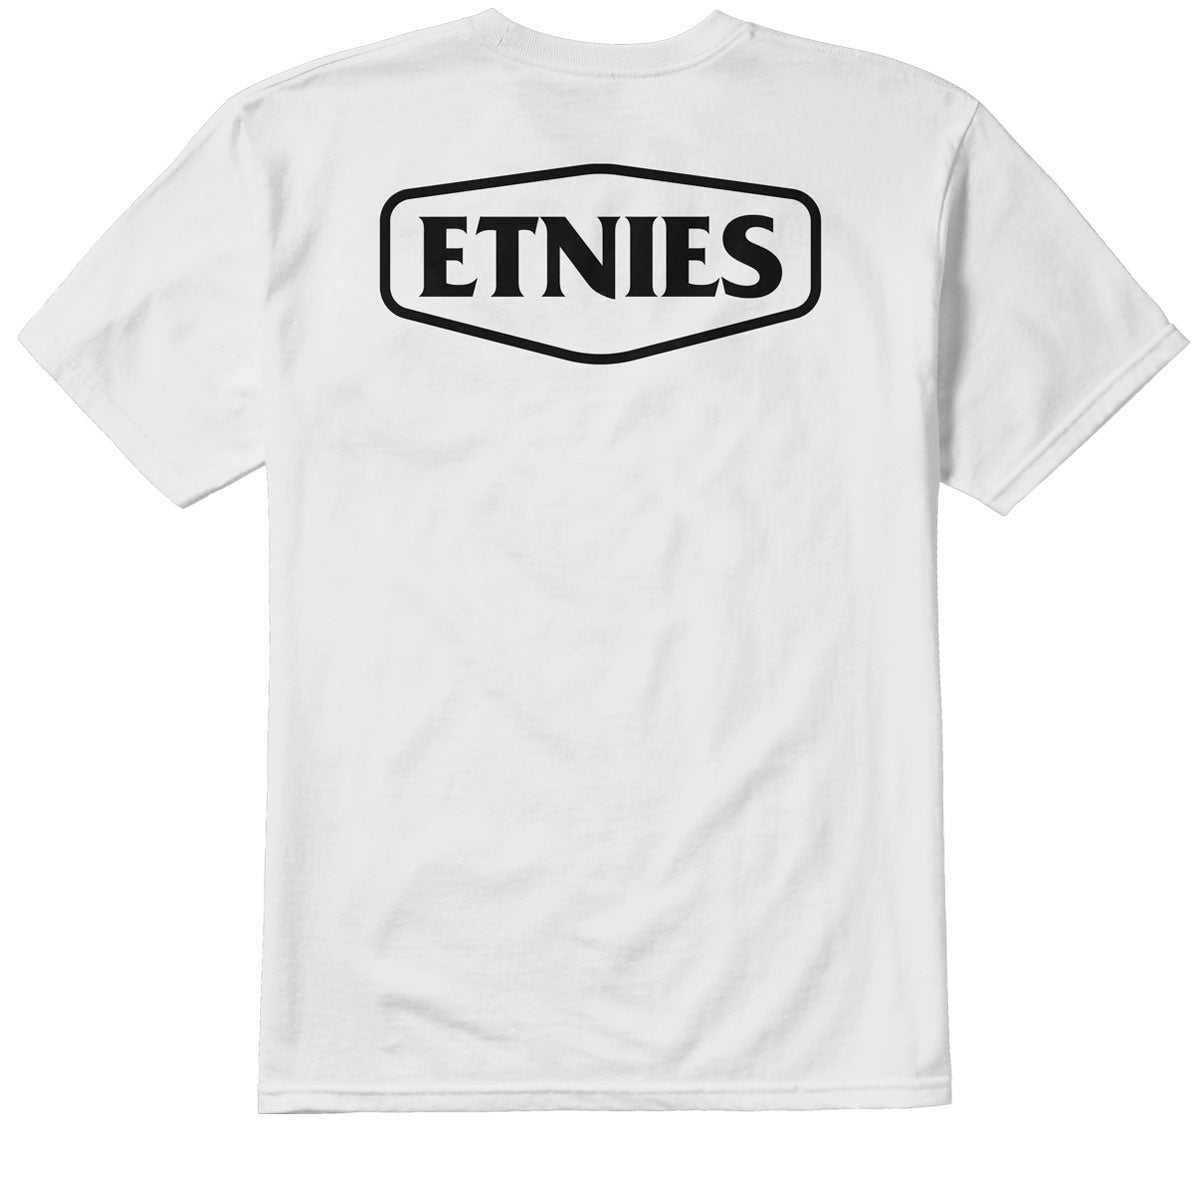 Etnies Dystopia Font T-Shirt - White image 2